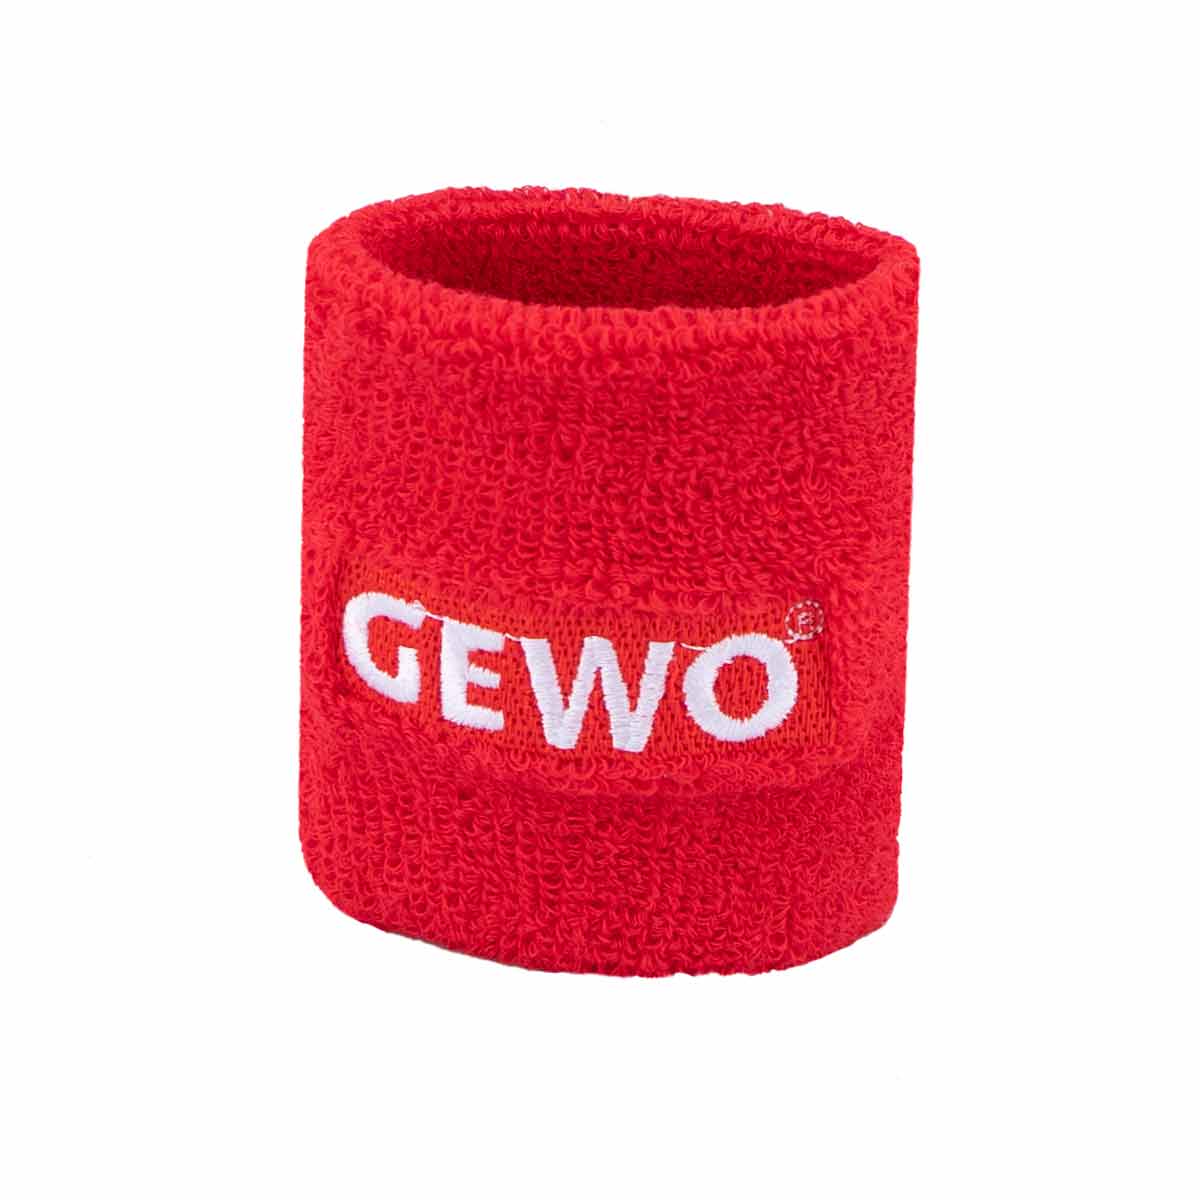 GEWO wrist band red